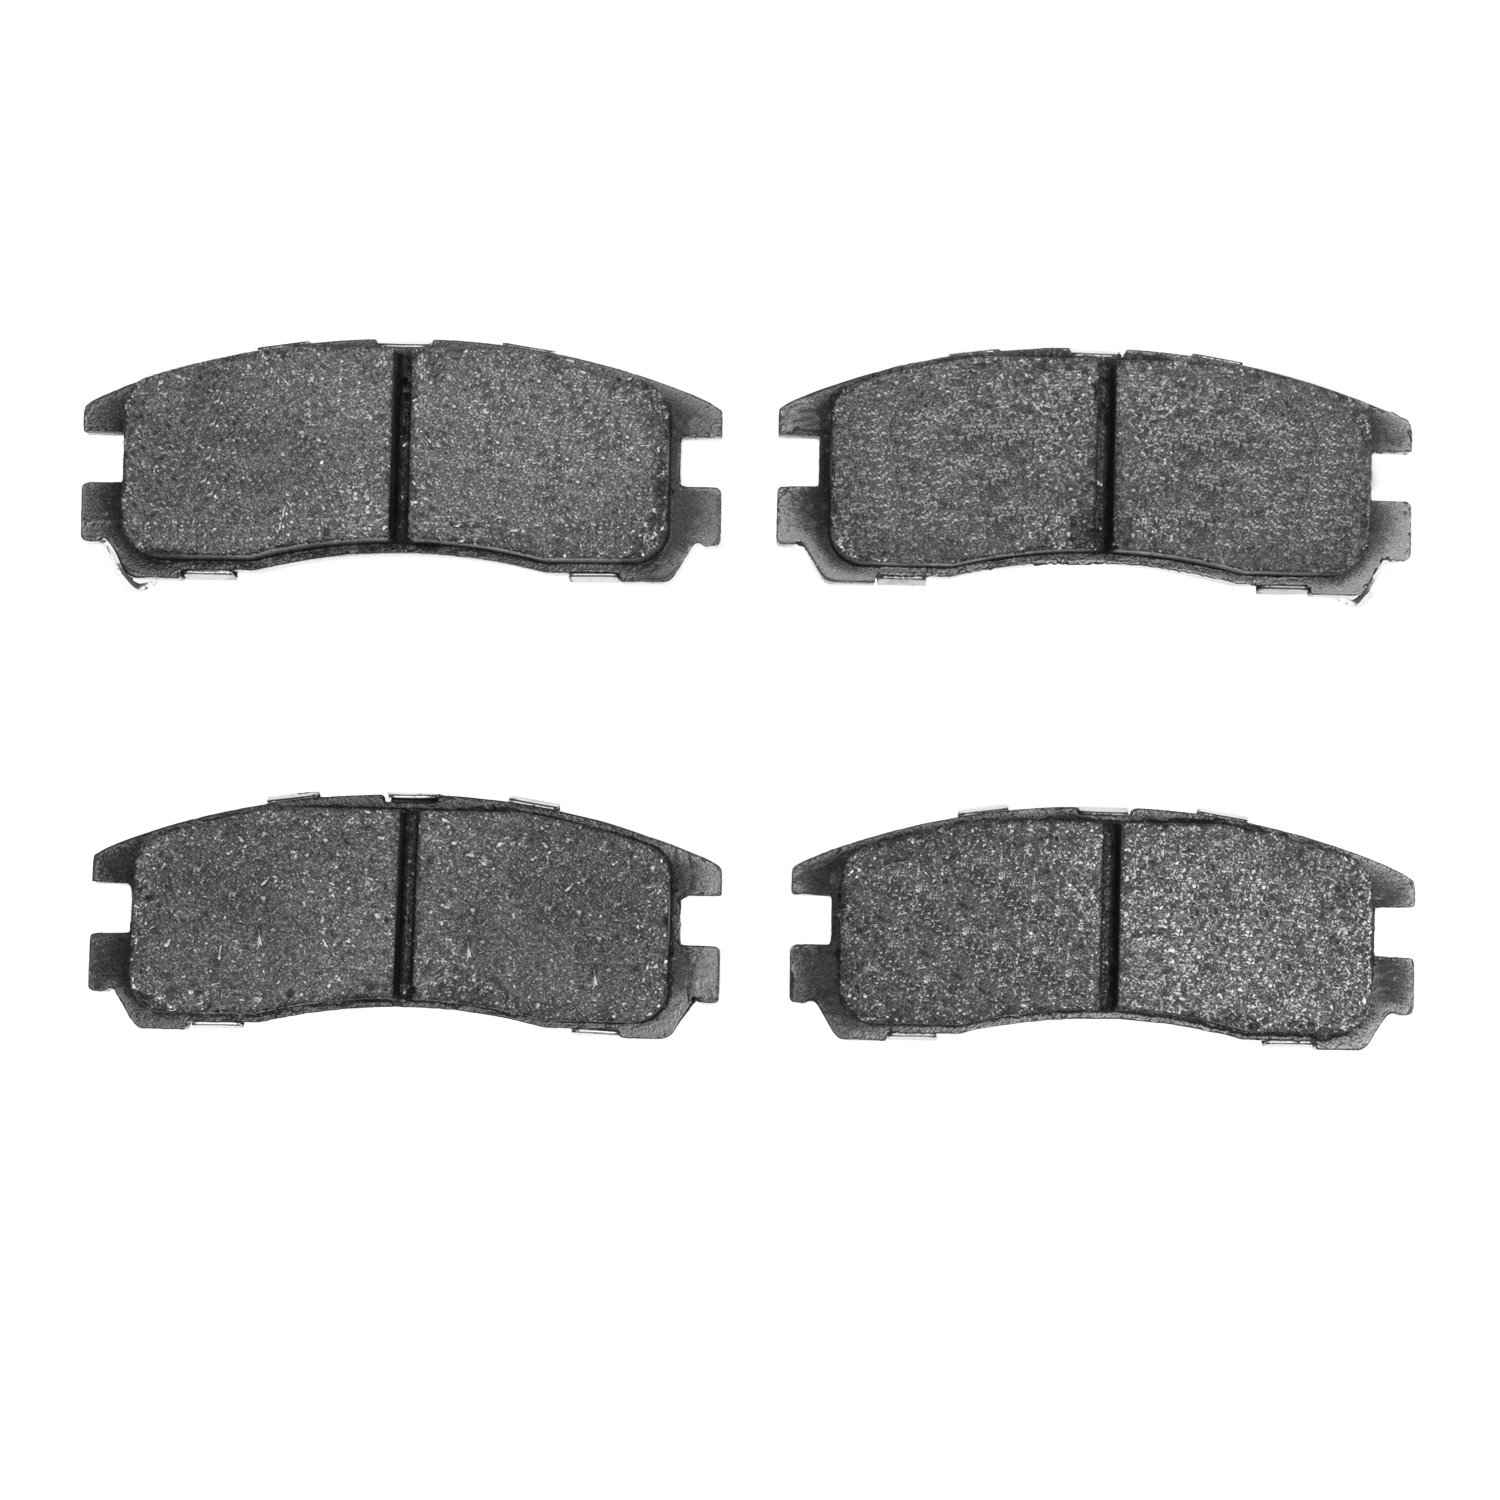 1310-0383-00 3000-Series Ceramic Brake Pads, 1988-2012 Multiple Makes/Models, Position: Rear